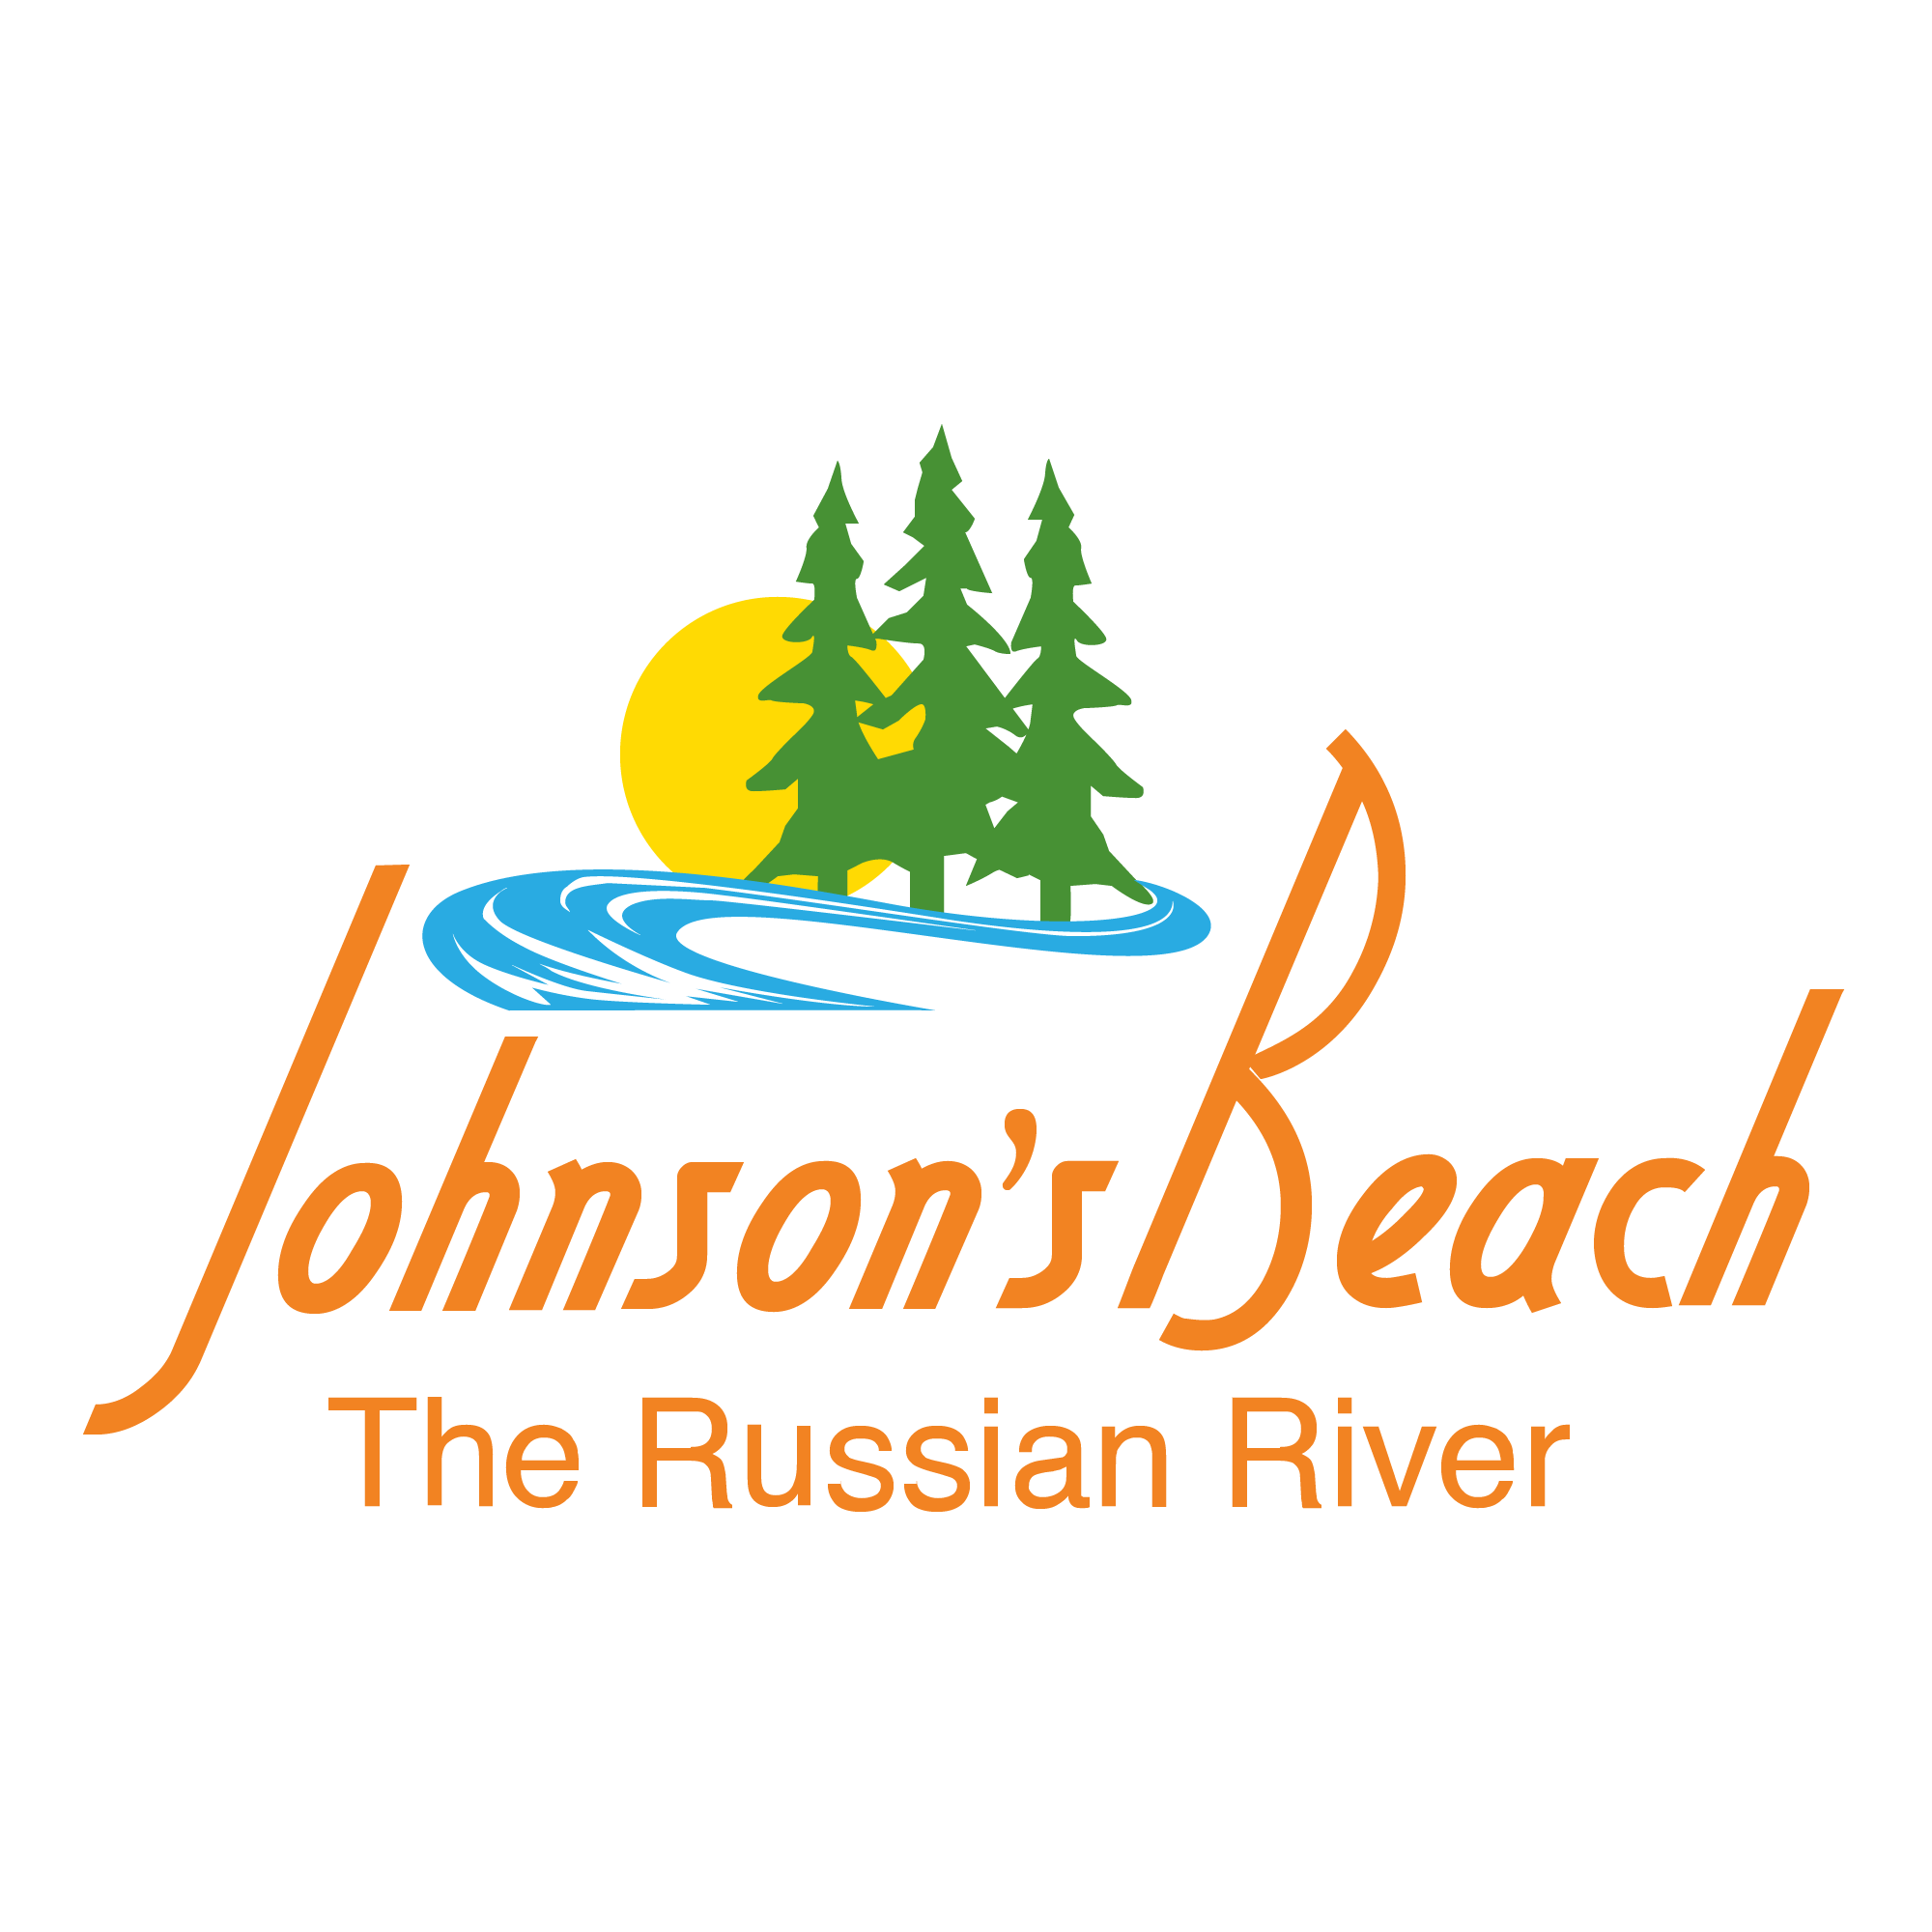 Johnsons-beach-logo.png